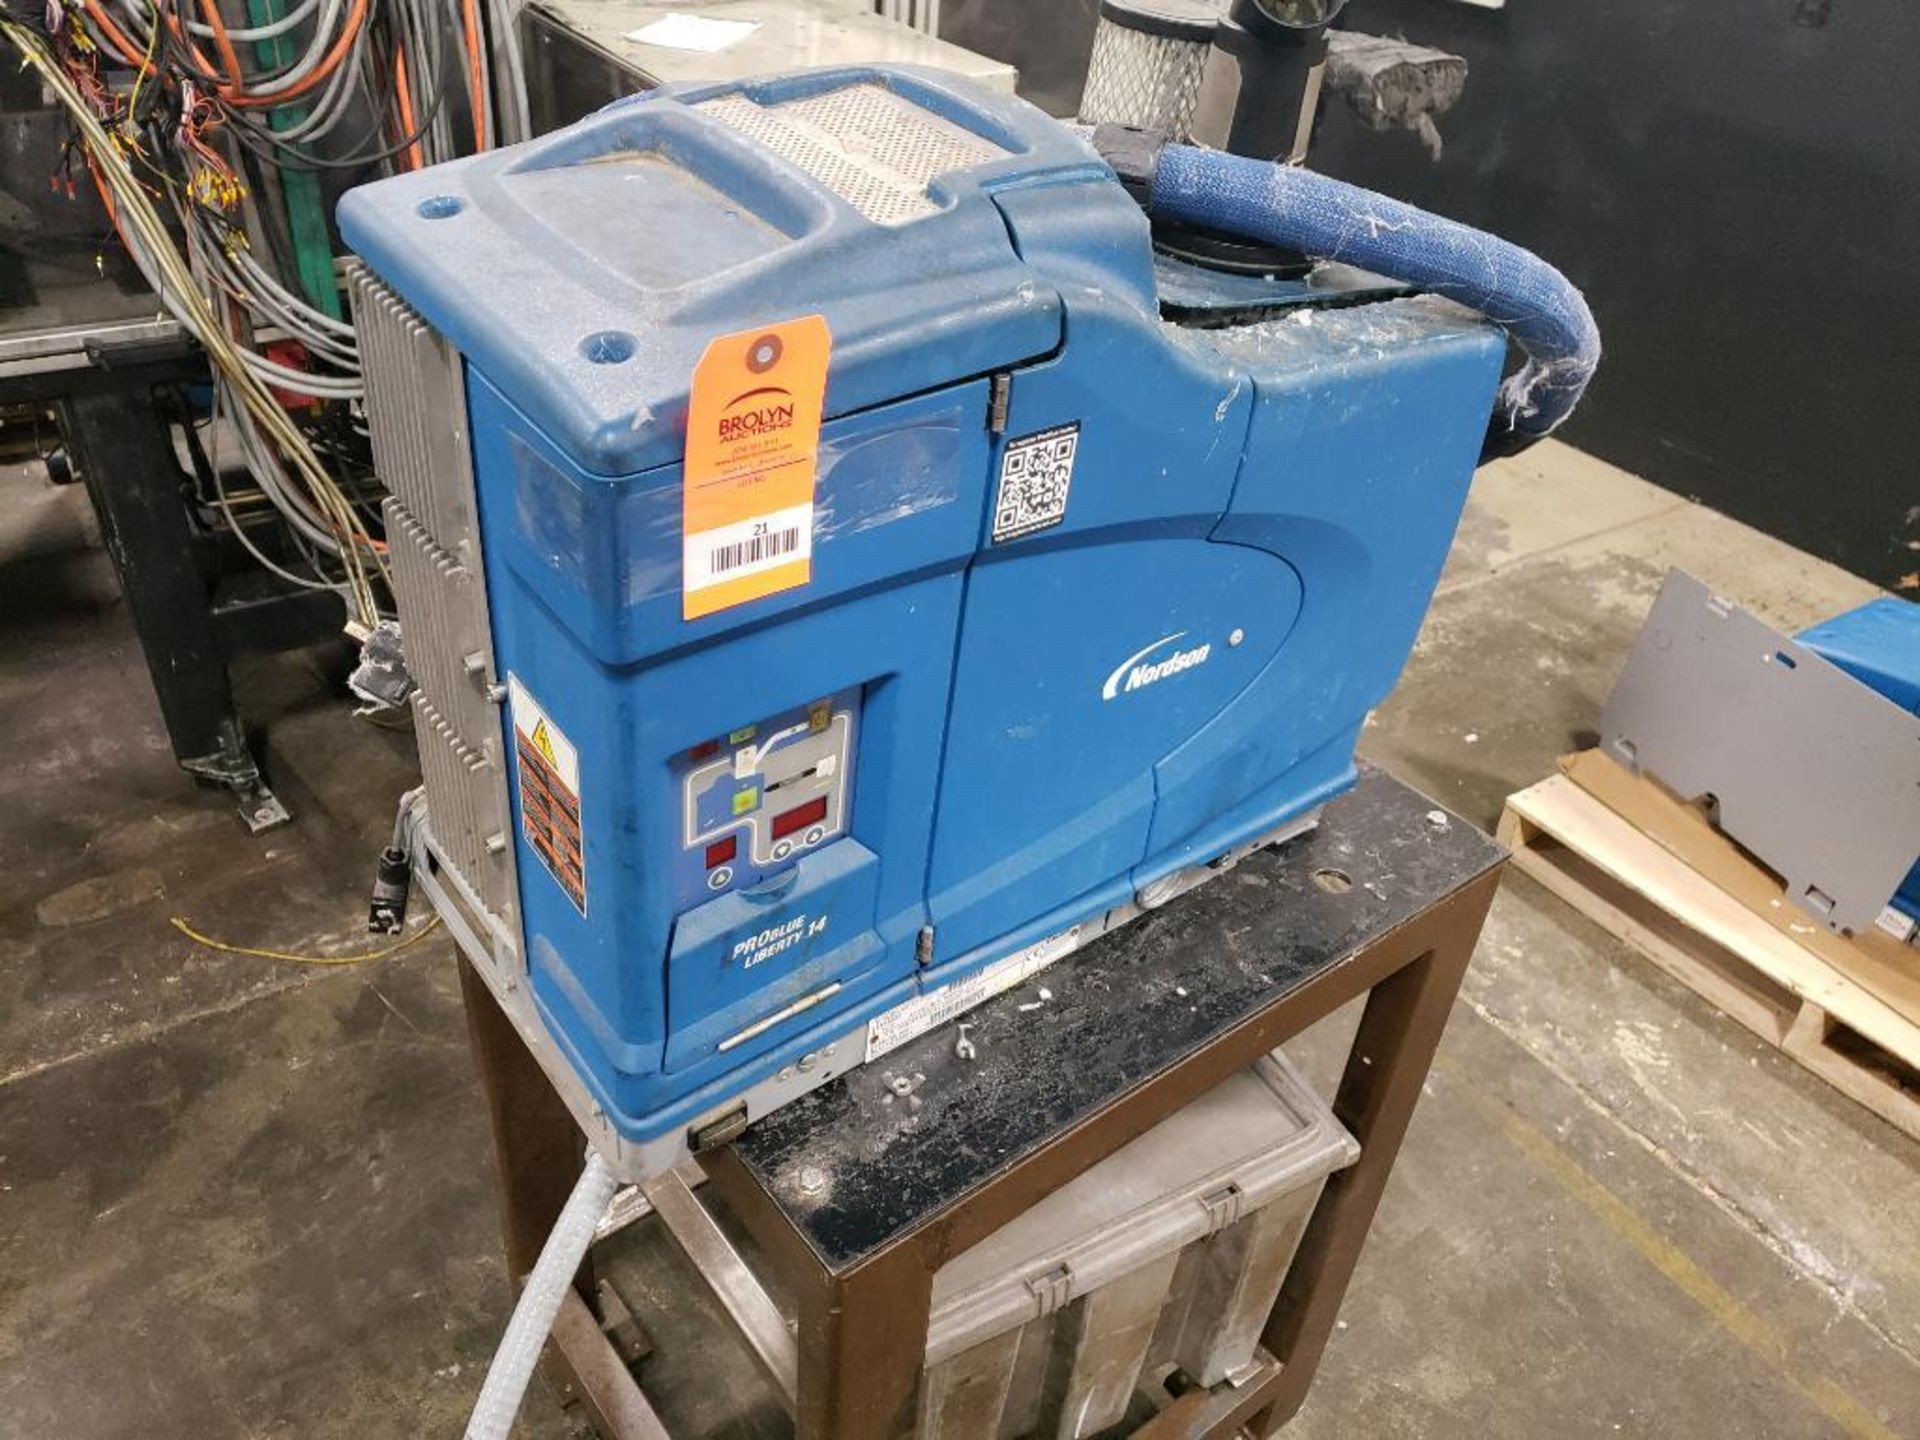 Nordson hot melt glue machine. Model Pro Blue Liberty 14.